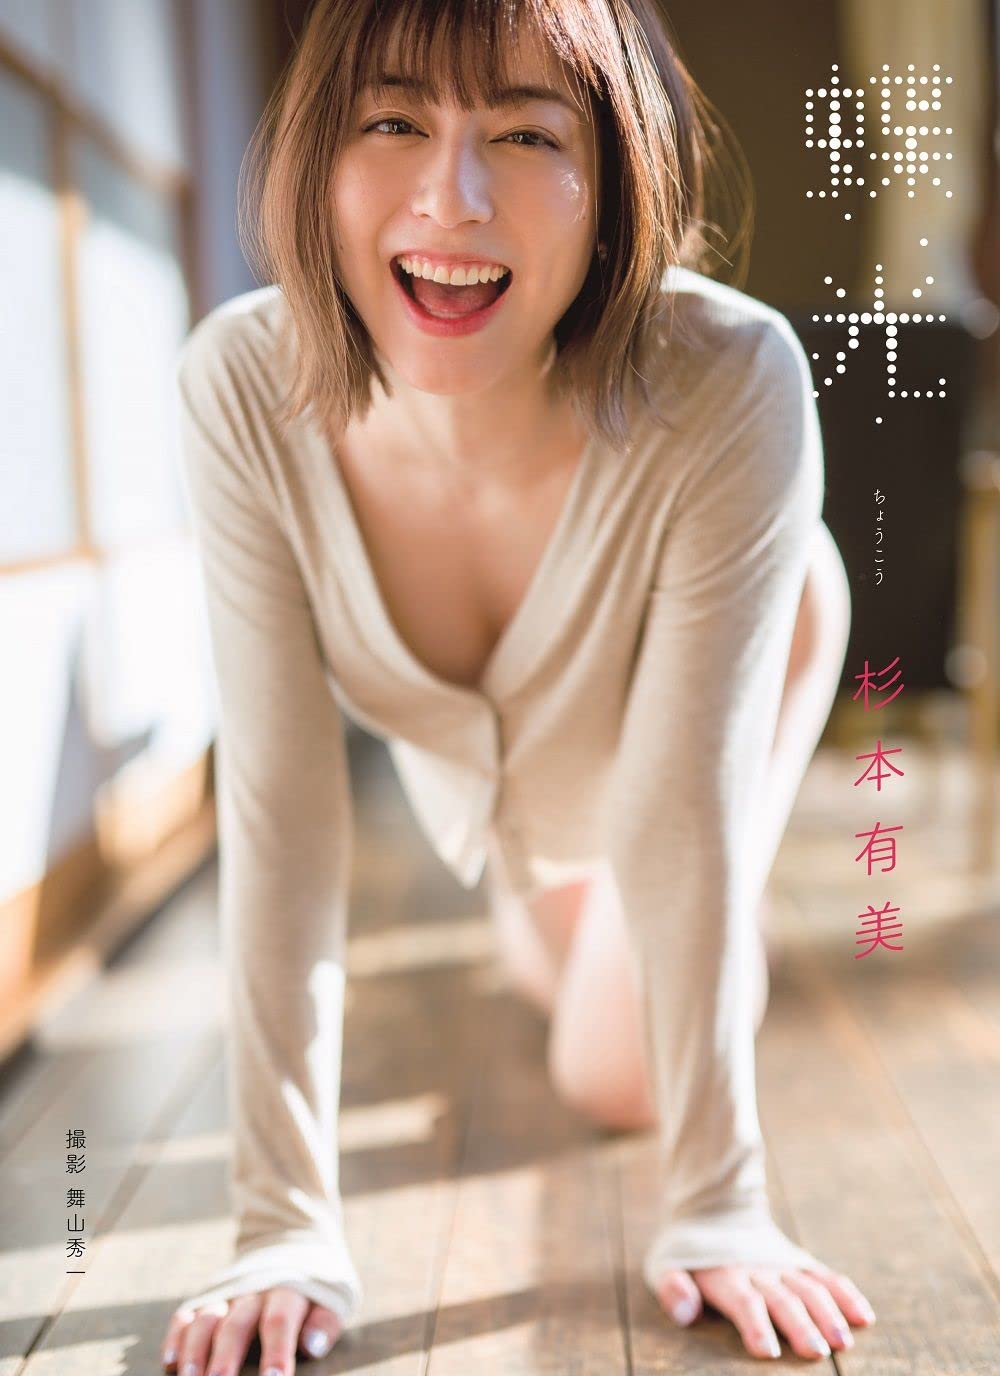 Yumi Sugimoto Photo Book "choukou"